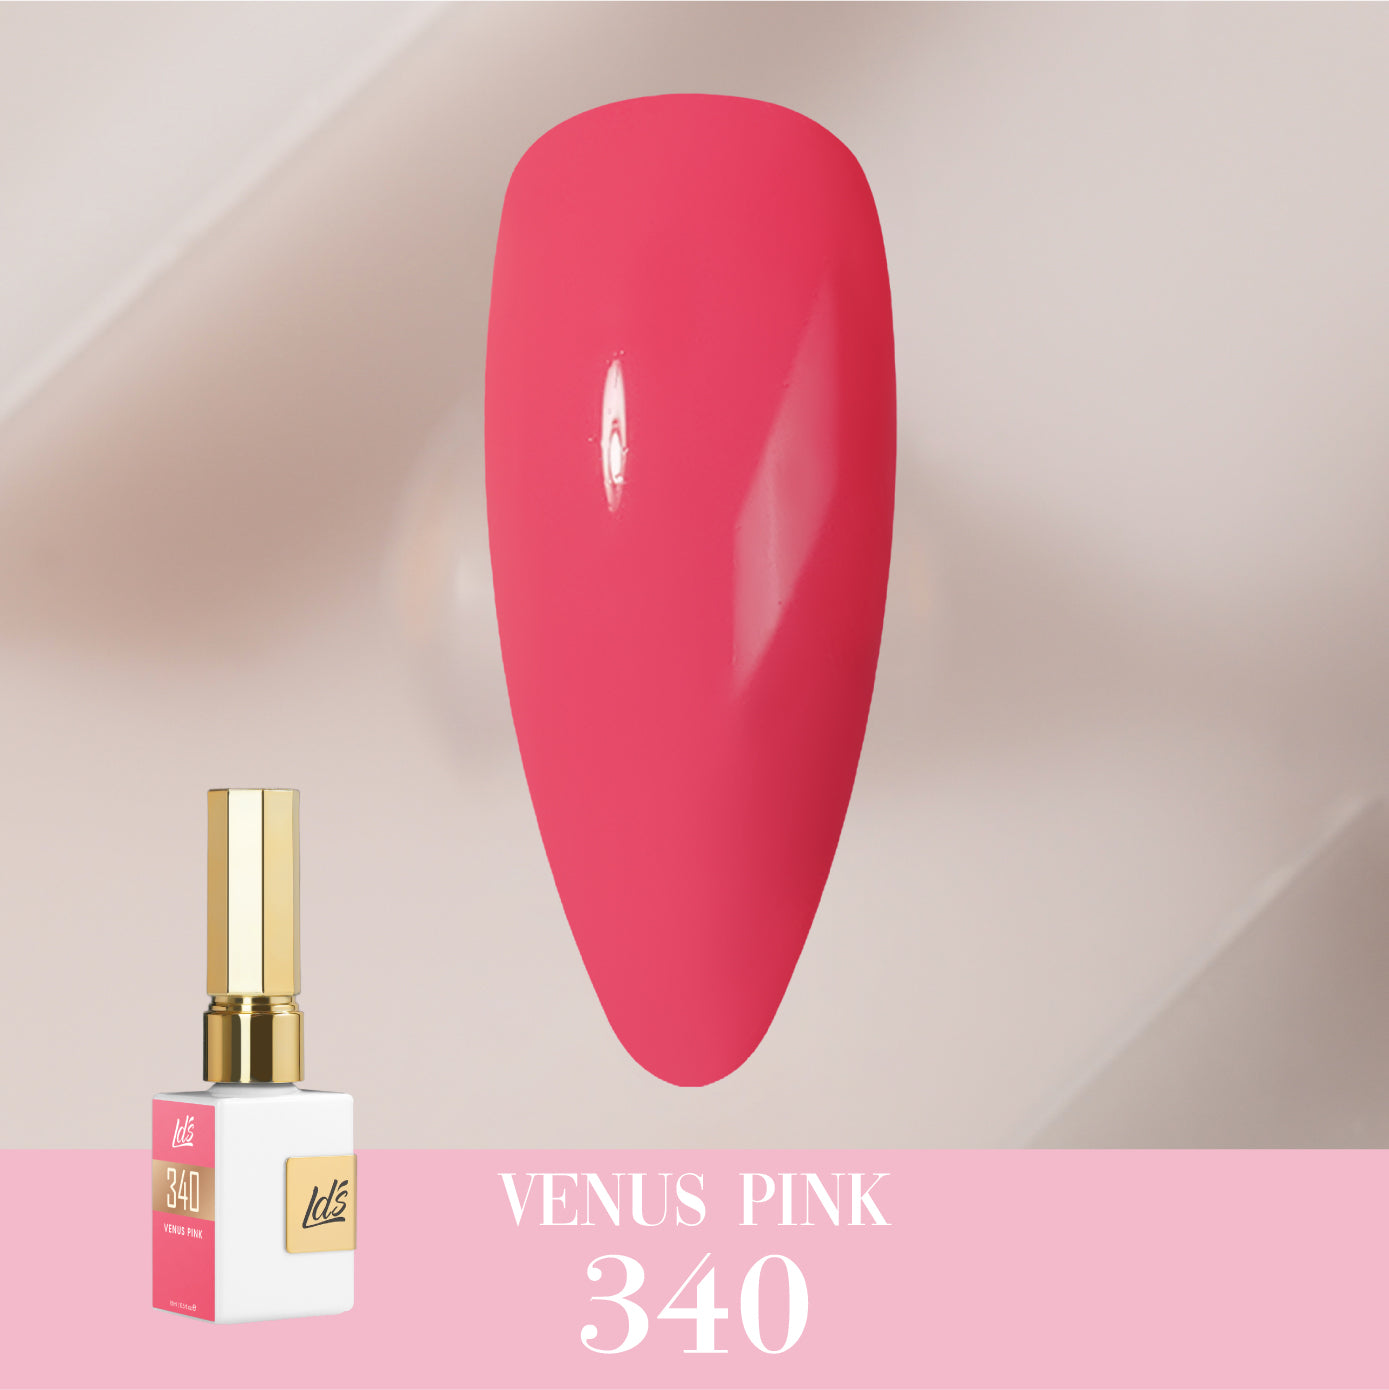 LDS Color Craze Collection - 340 Venus Pink - Gel Polish 0.5oz